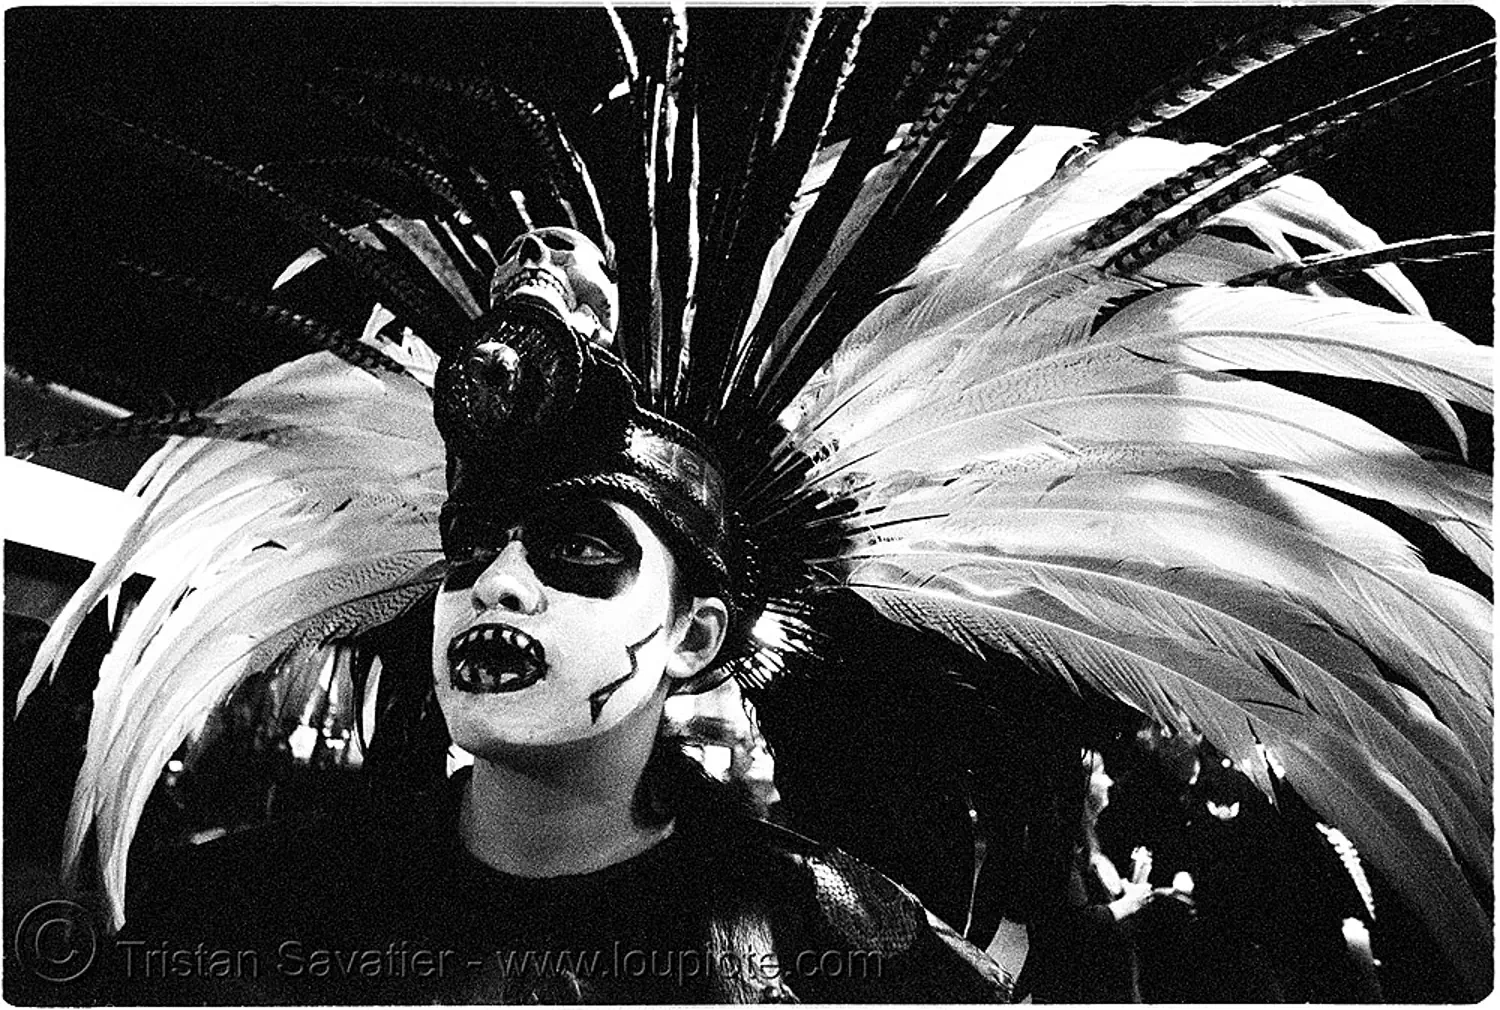 aztec dance group 'xolo, sacred dance' - dia de los muertos - halloween (san francisco) - teresa, aztec dancer, costumes, day of the dead, dia de los muertos, feathers, halloween, hat, makeup, night, p3200tmz, pushed, sacred dance, tmax, woman, xolo